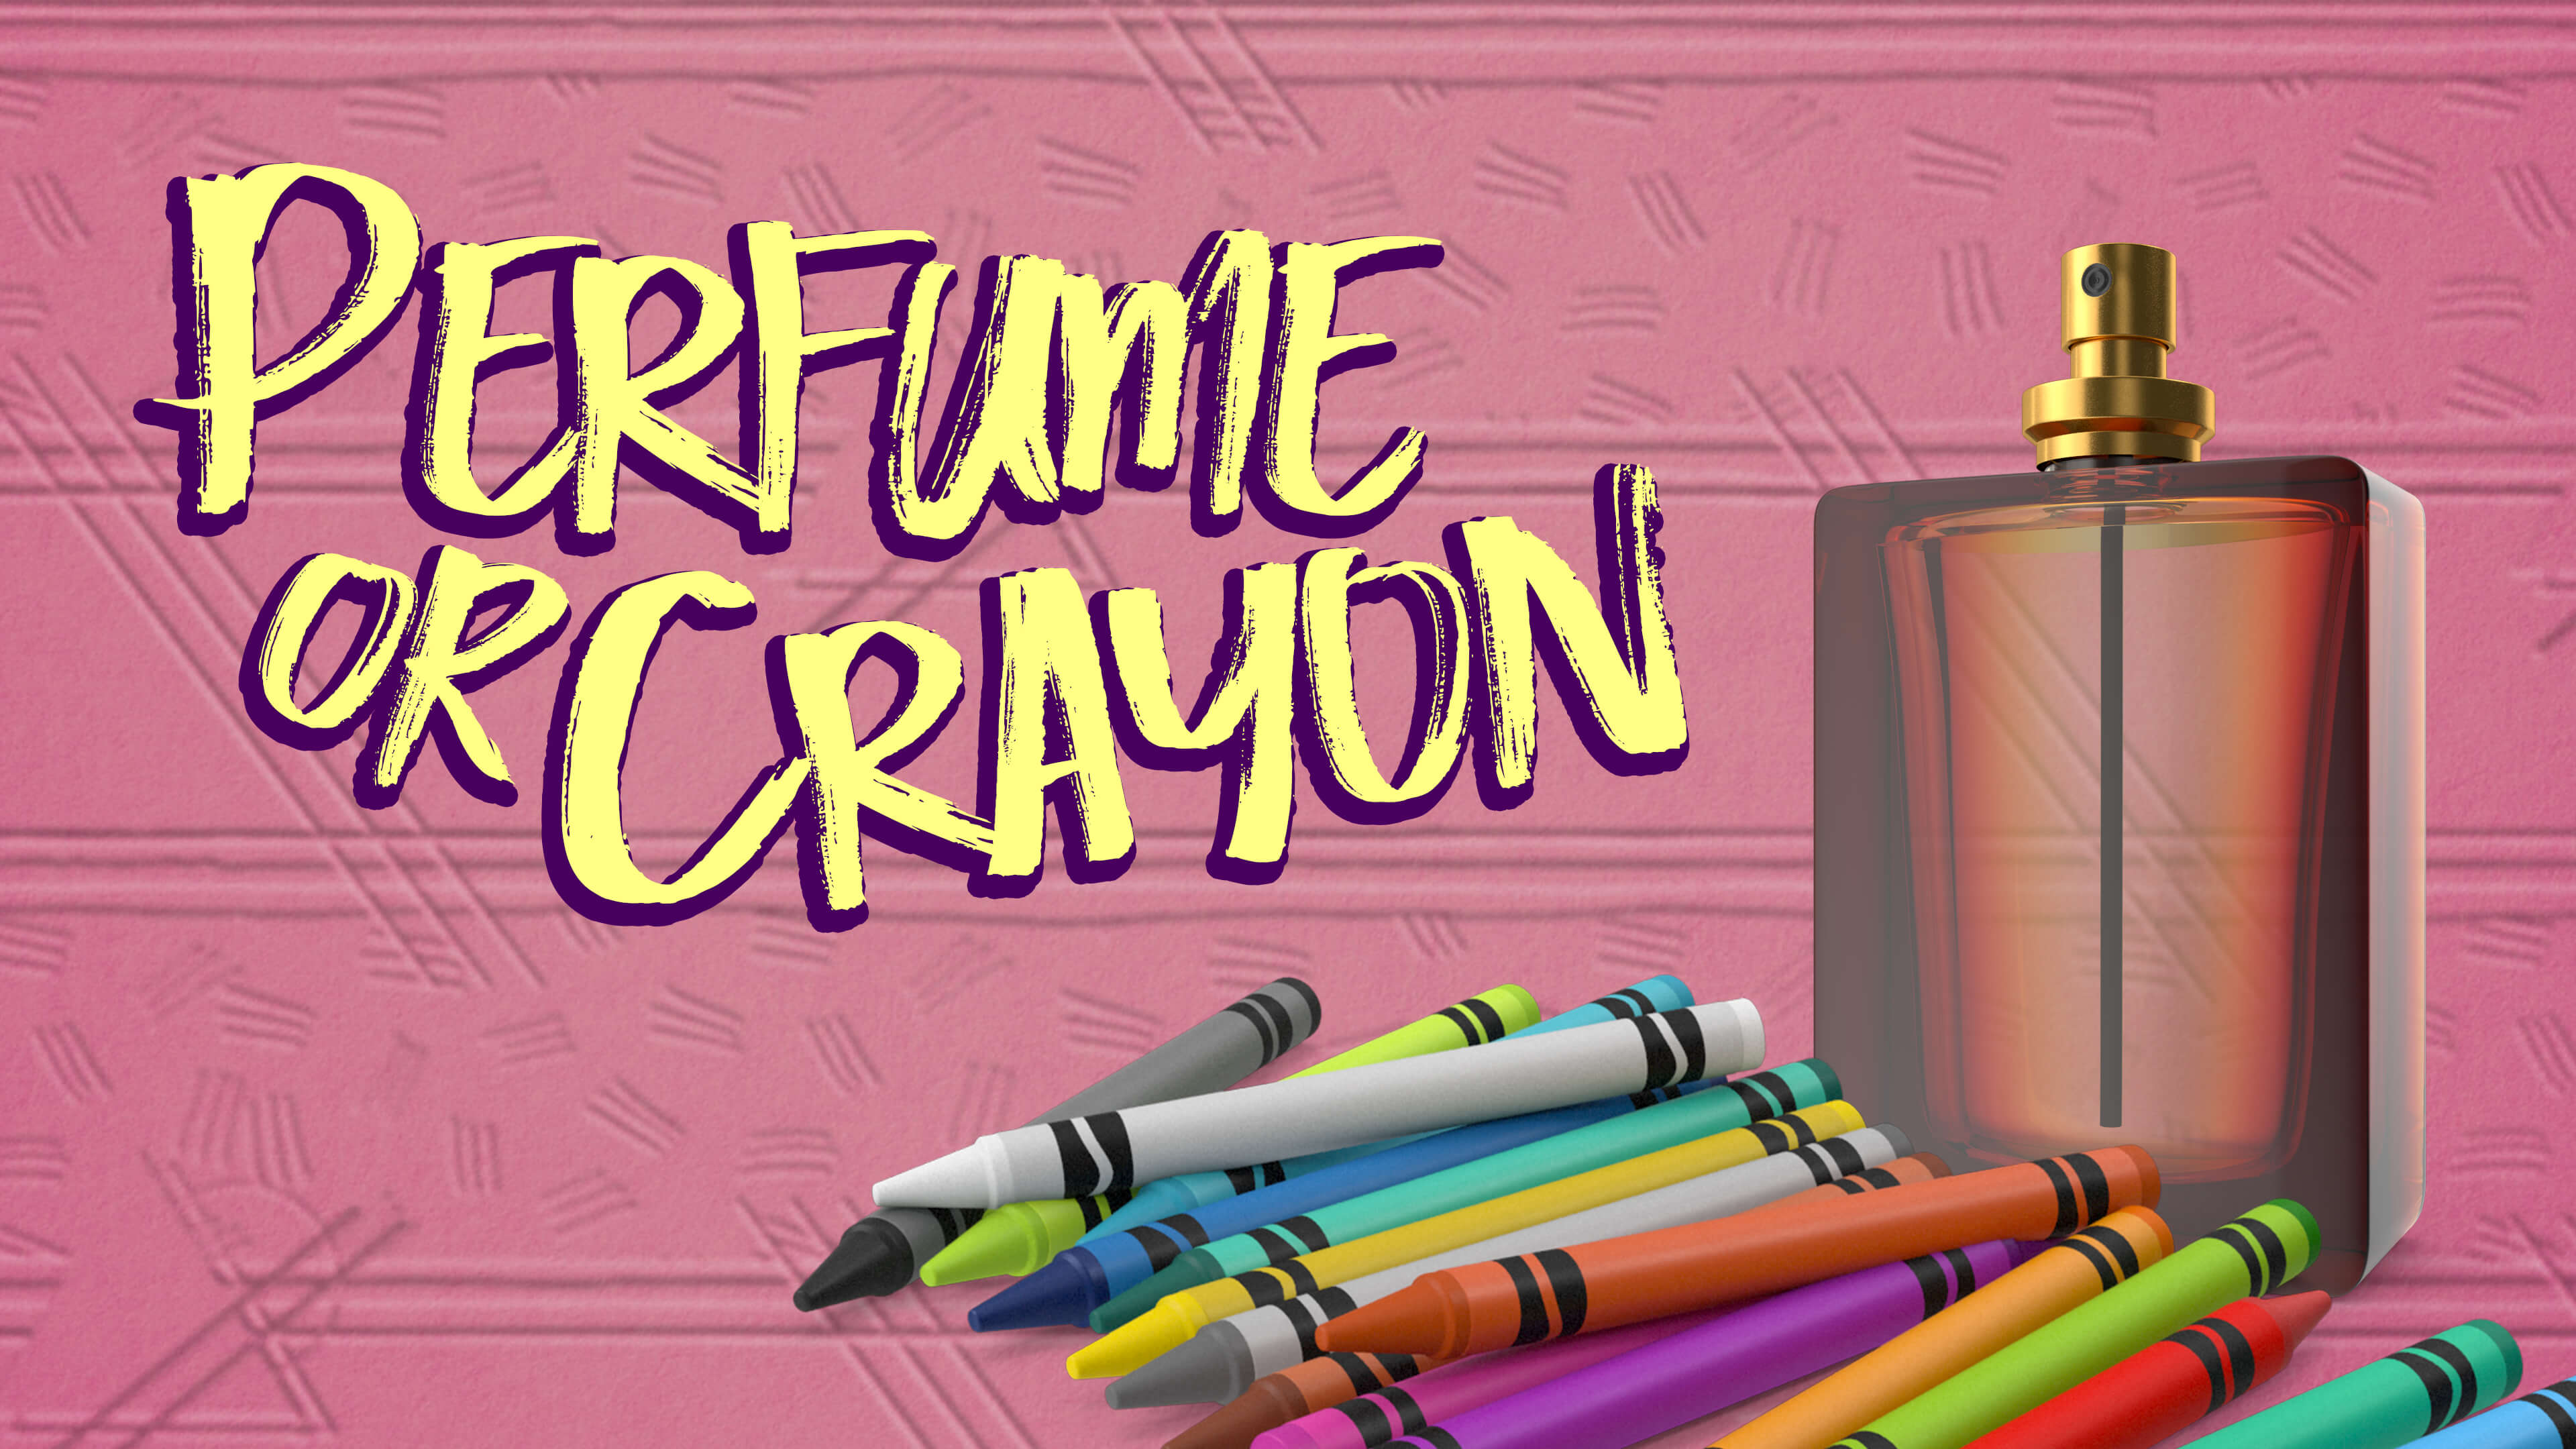 Perfume or Crayon